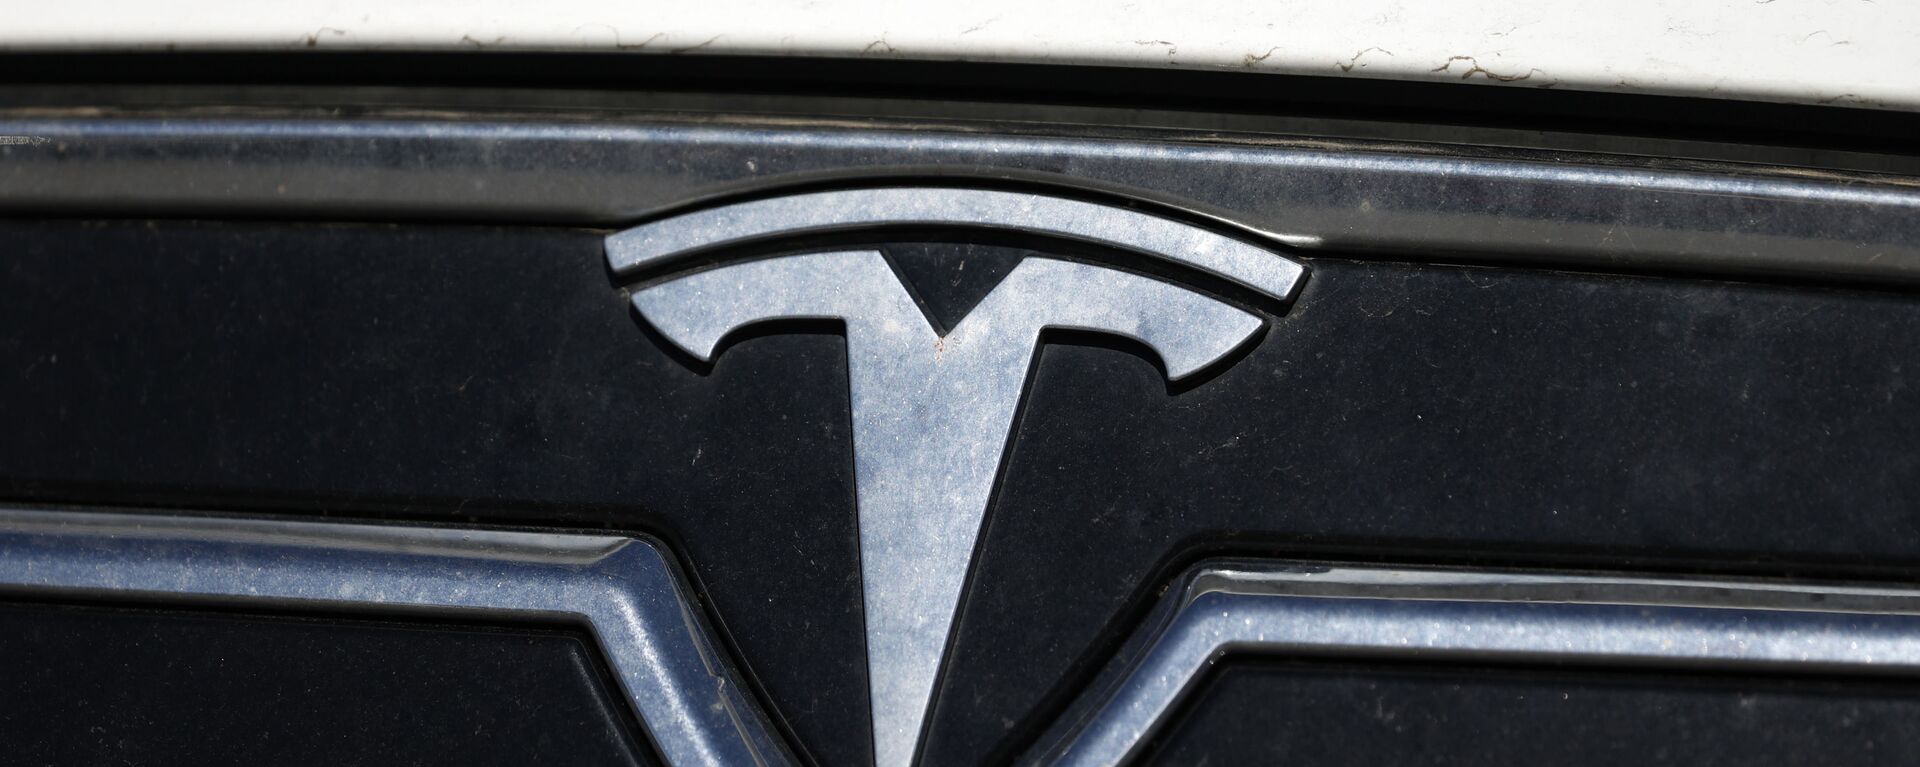 The company logo shines off the grille of an unsold 2020 Model S sedan at a Tesla dealership Sunday, July 19, 2020, in Littleton, Colorado. - Sputnik International, 1920, 04.06.2022